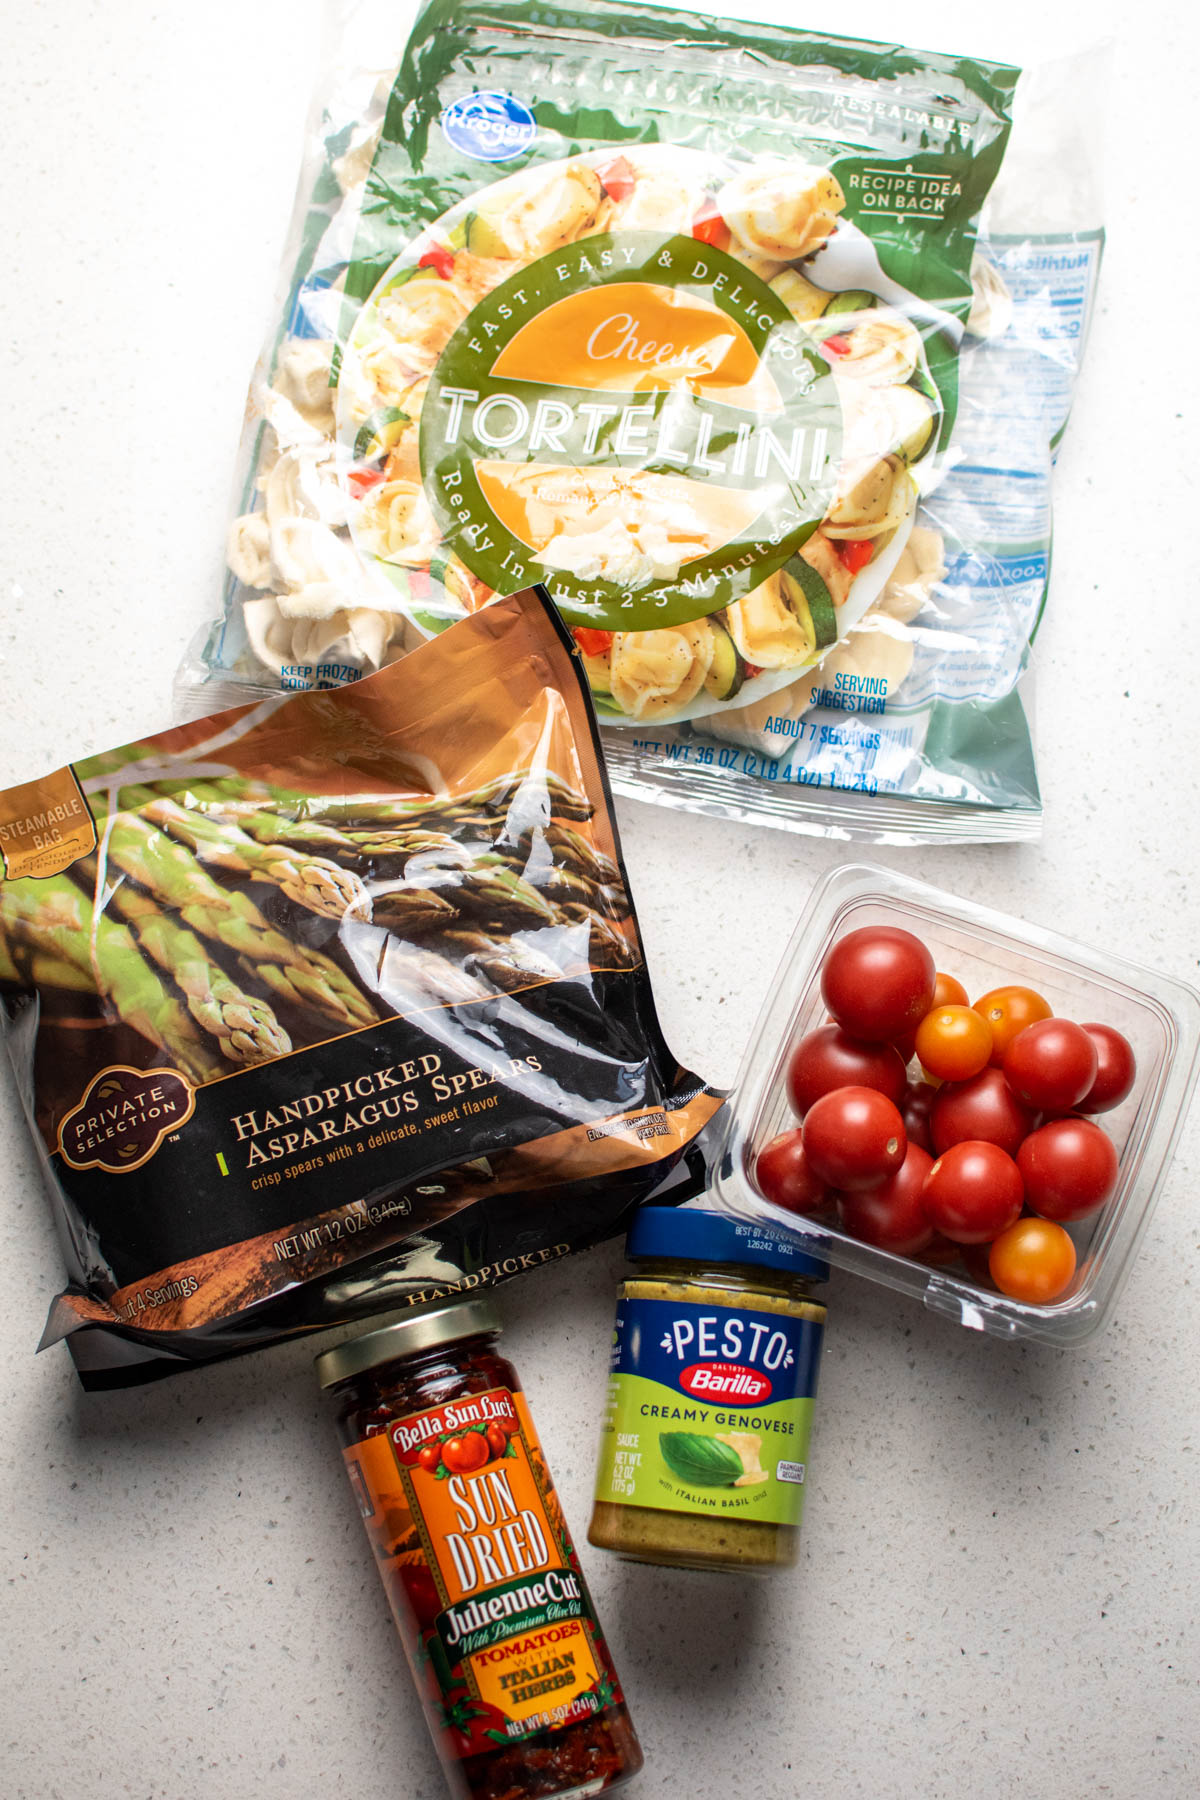 Pesto tortellini ingredients on quartz countertop including basil pesto, fresh tomatoes, and asparagus.